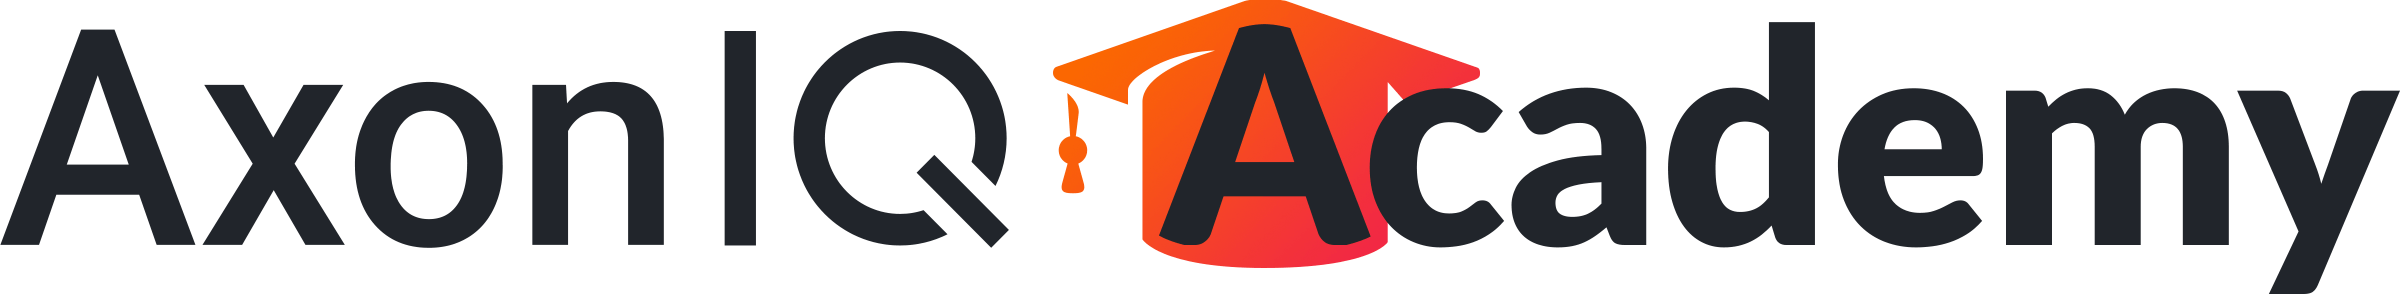 AxonIQ Academy